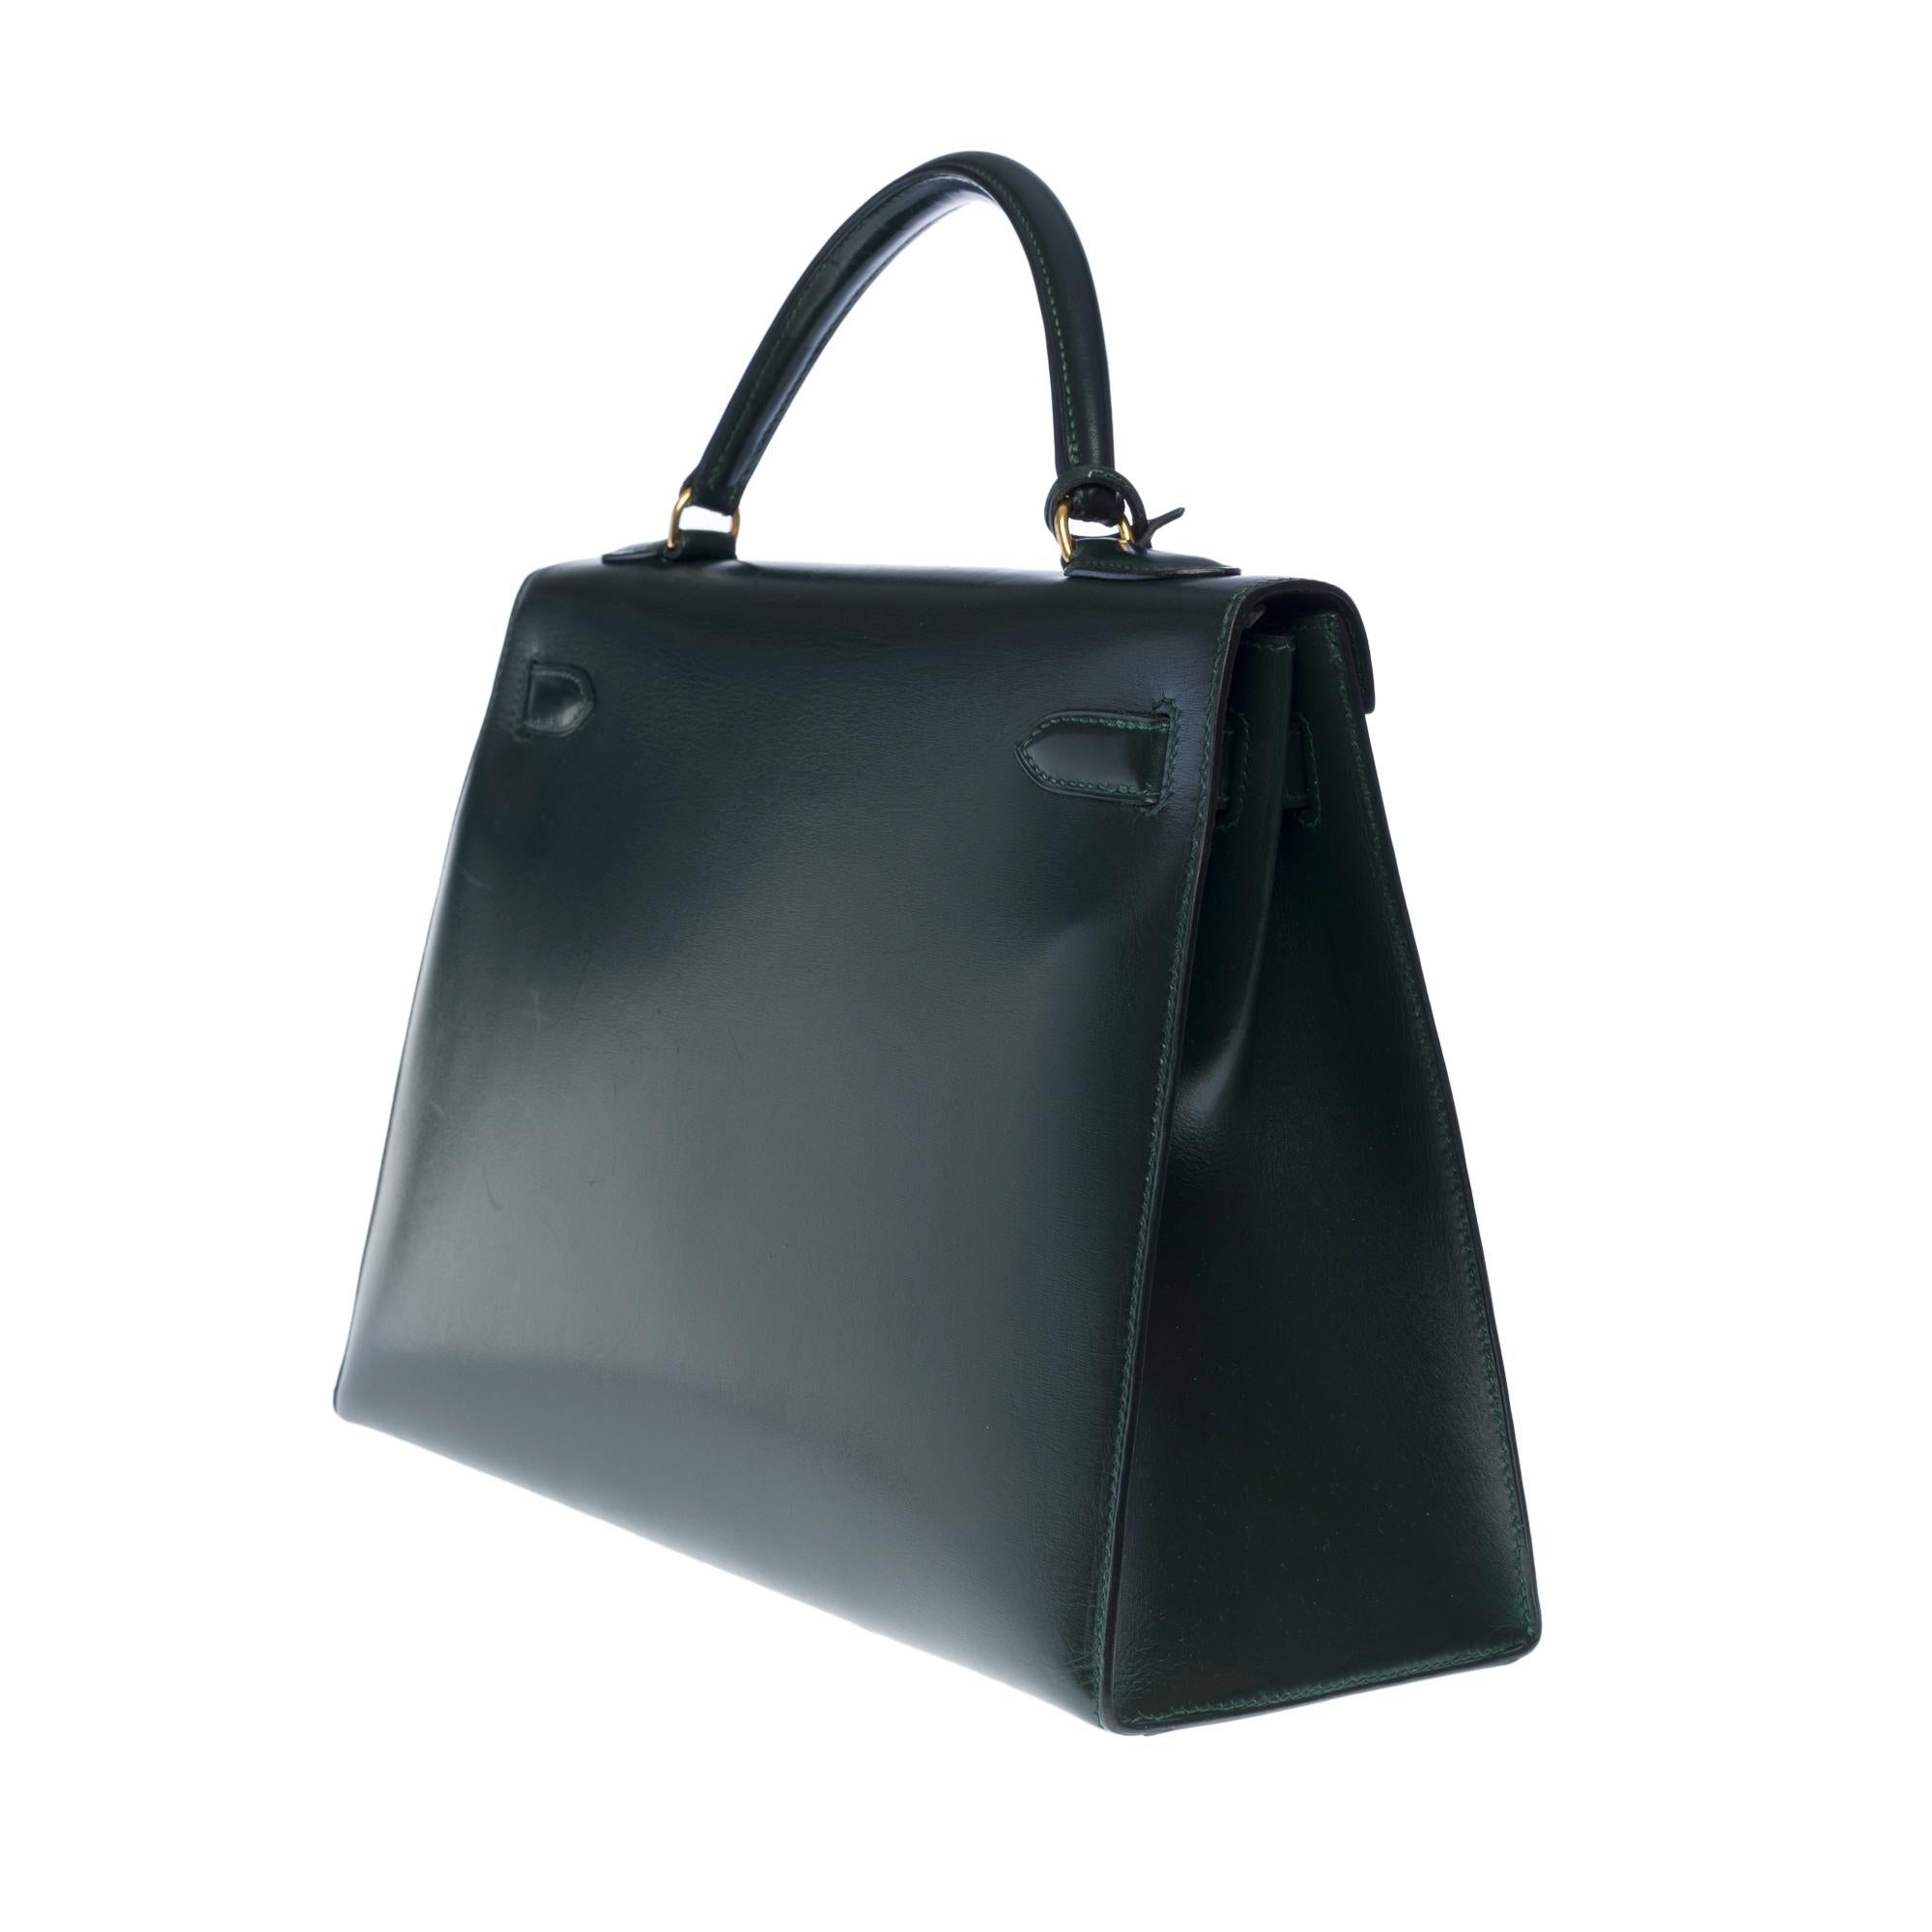 Rare Hermès Kelly 32 sellier handbag double straps in green box calf leather, GHW en vente 2